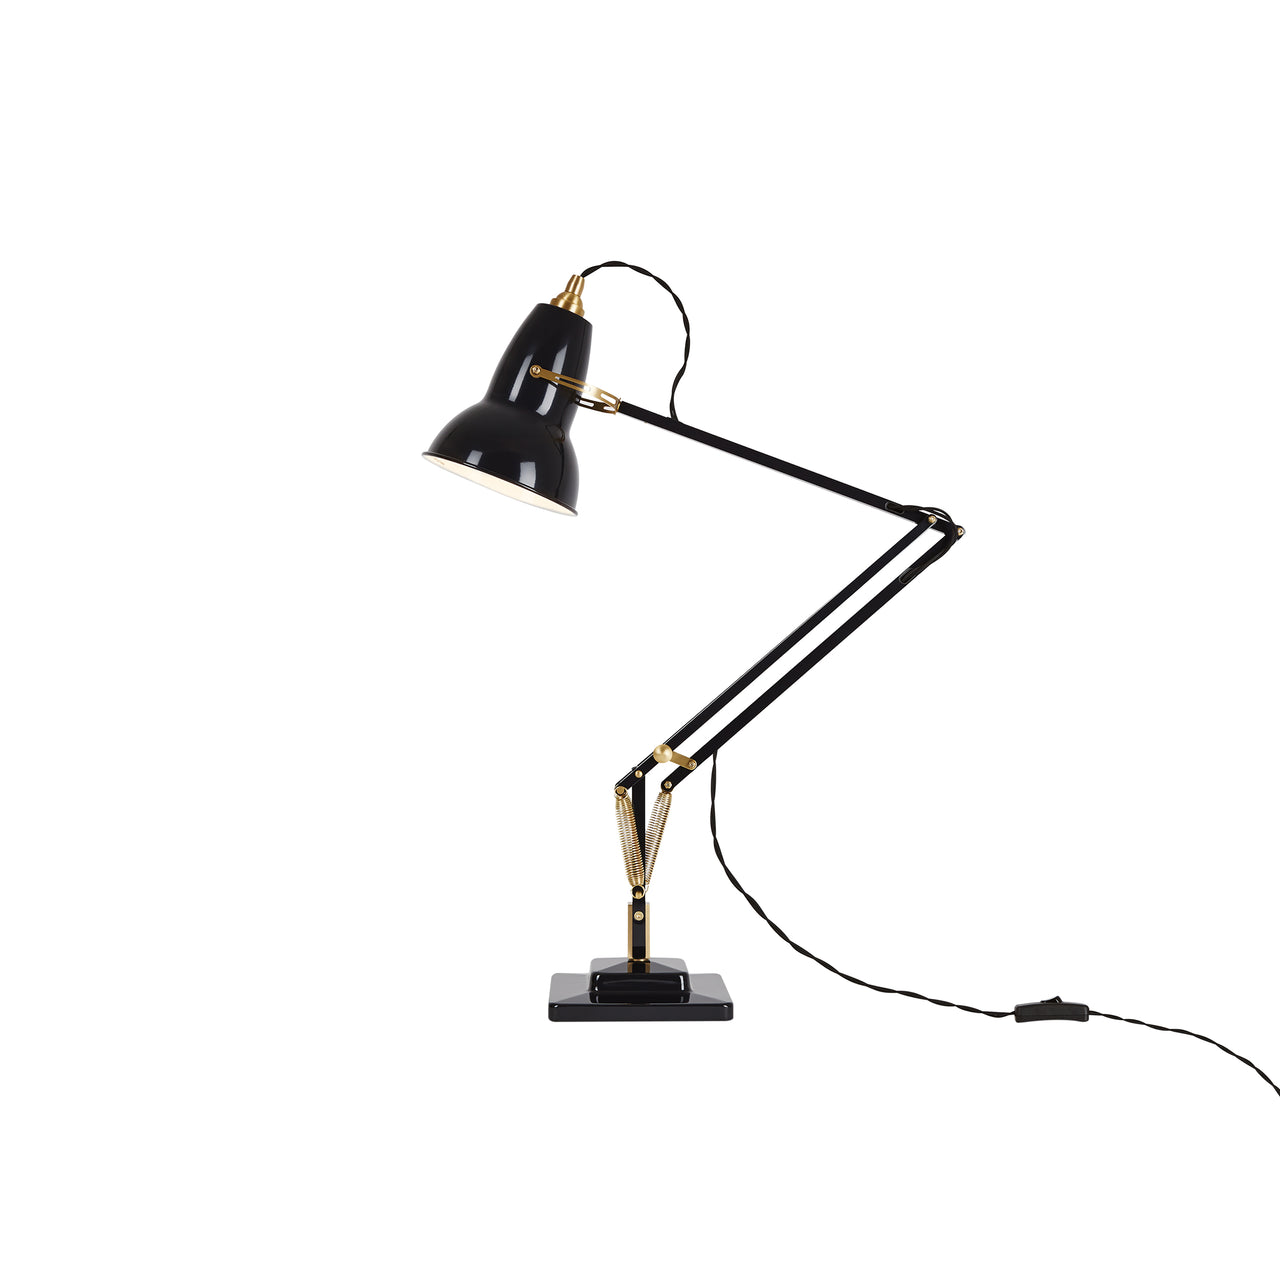 Original 1227 Brass Desk Lamp: Jet Black